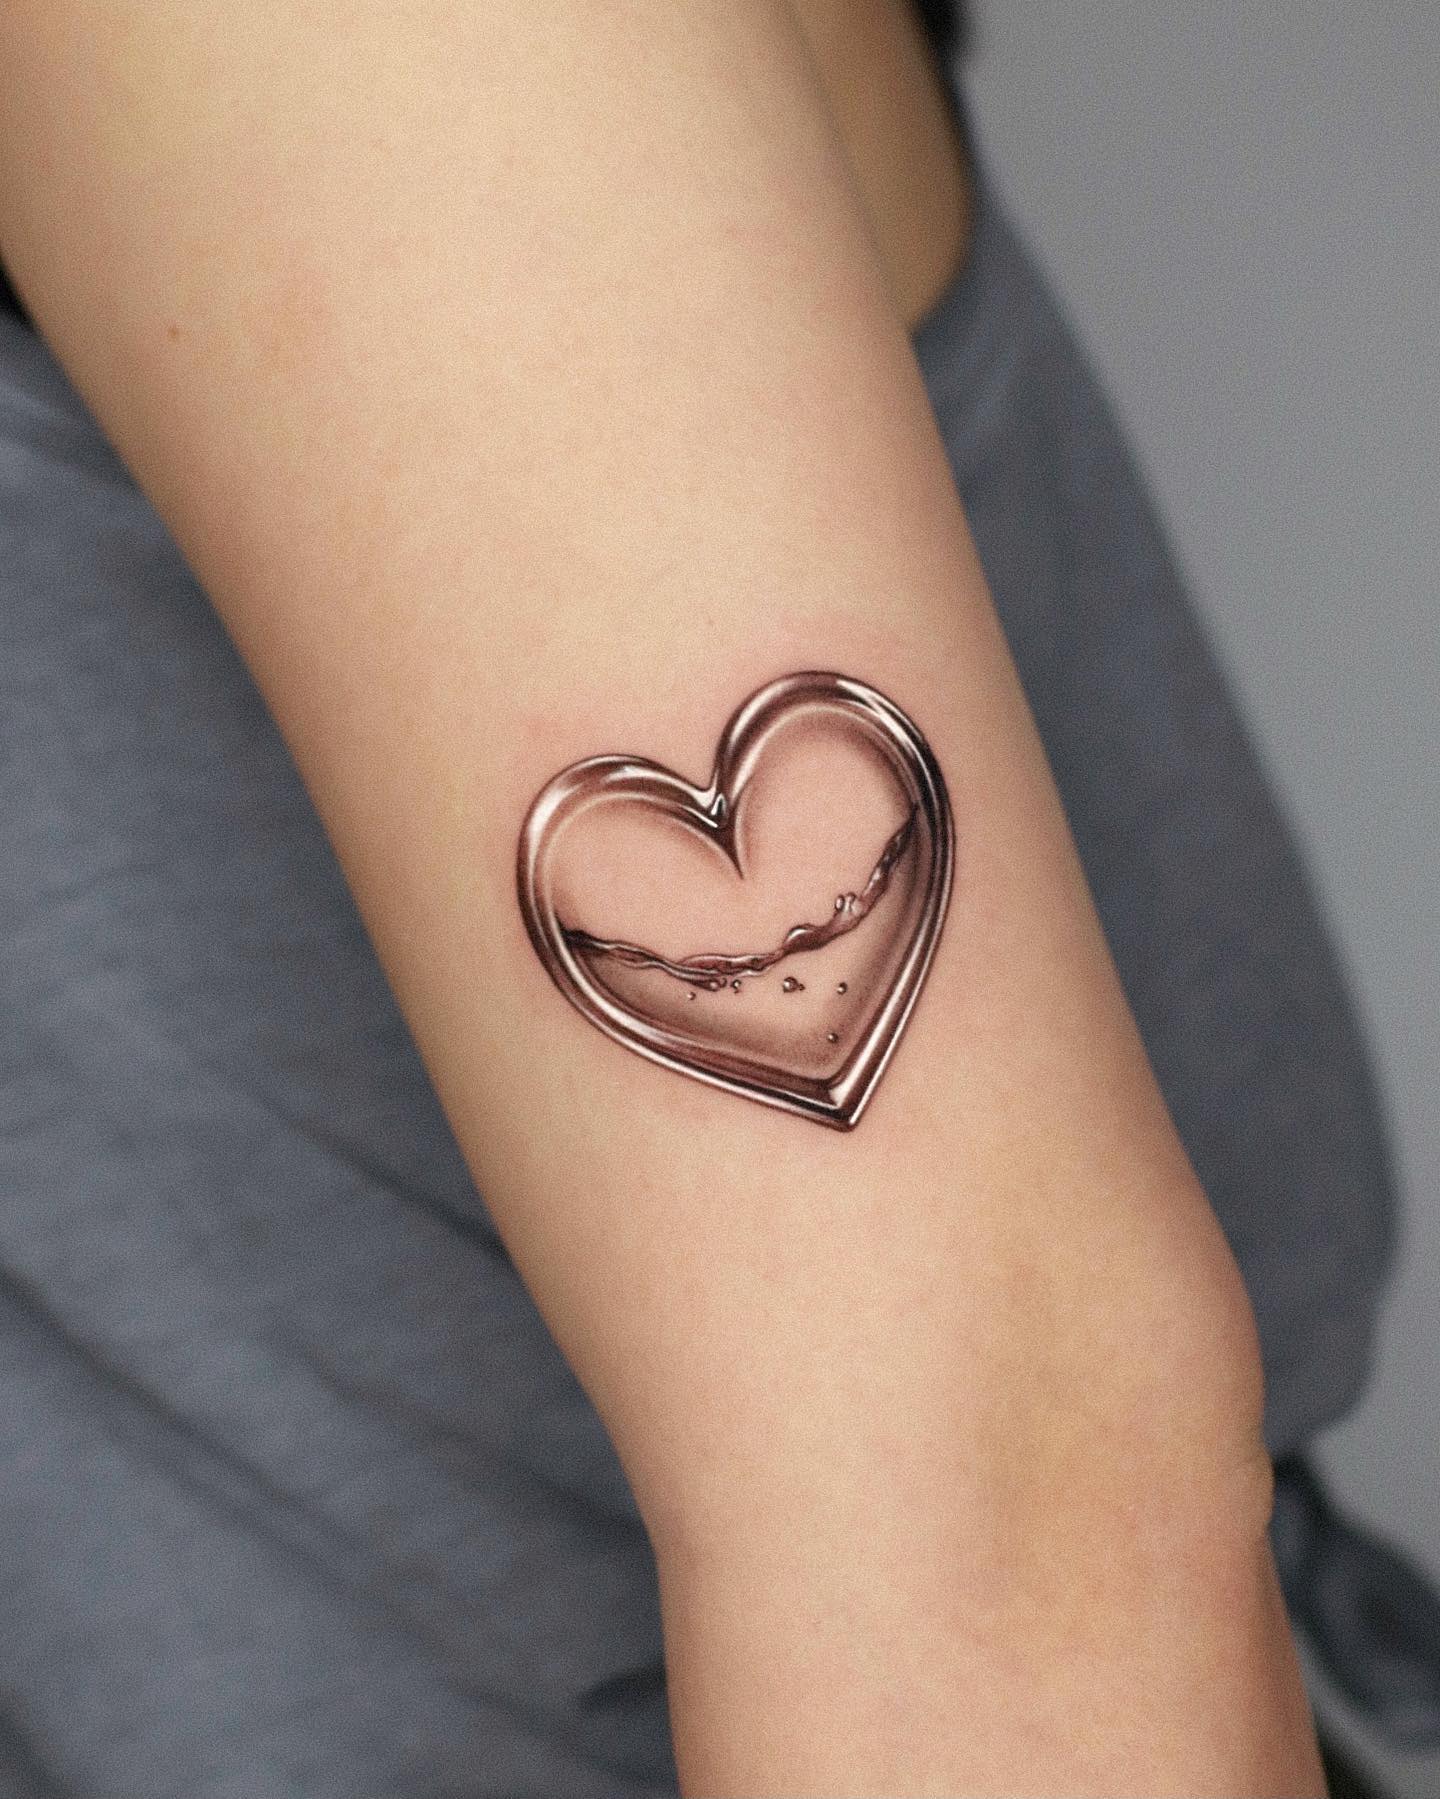 3D heart tattoo done bodyartbtm        3dtattoo  bangaloretattooartist bangaloretattoostudio bangalorenightlife   Instagram